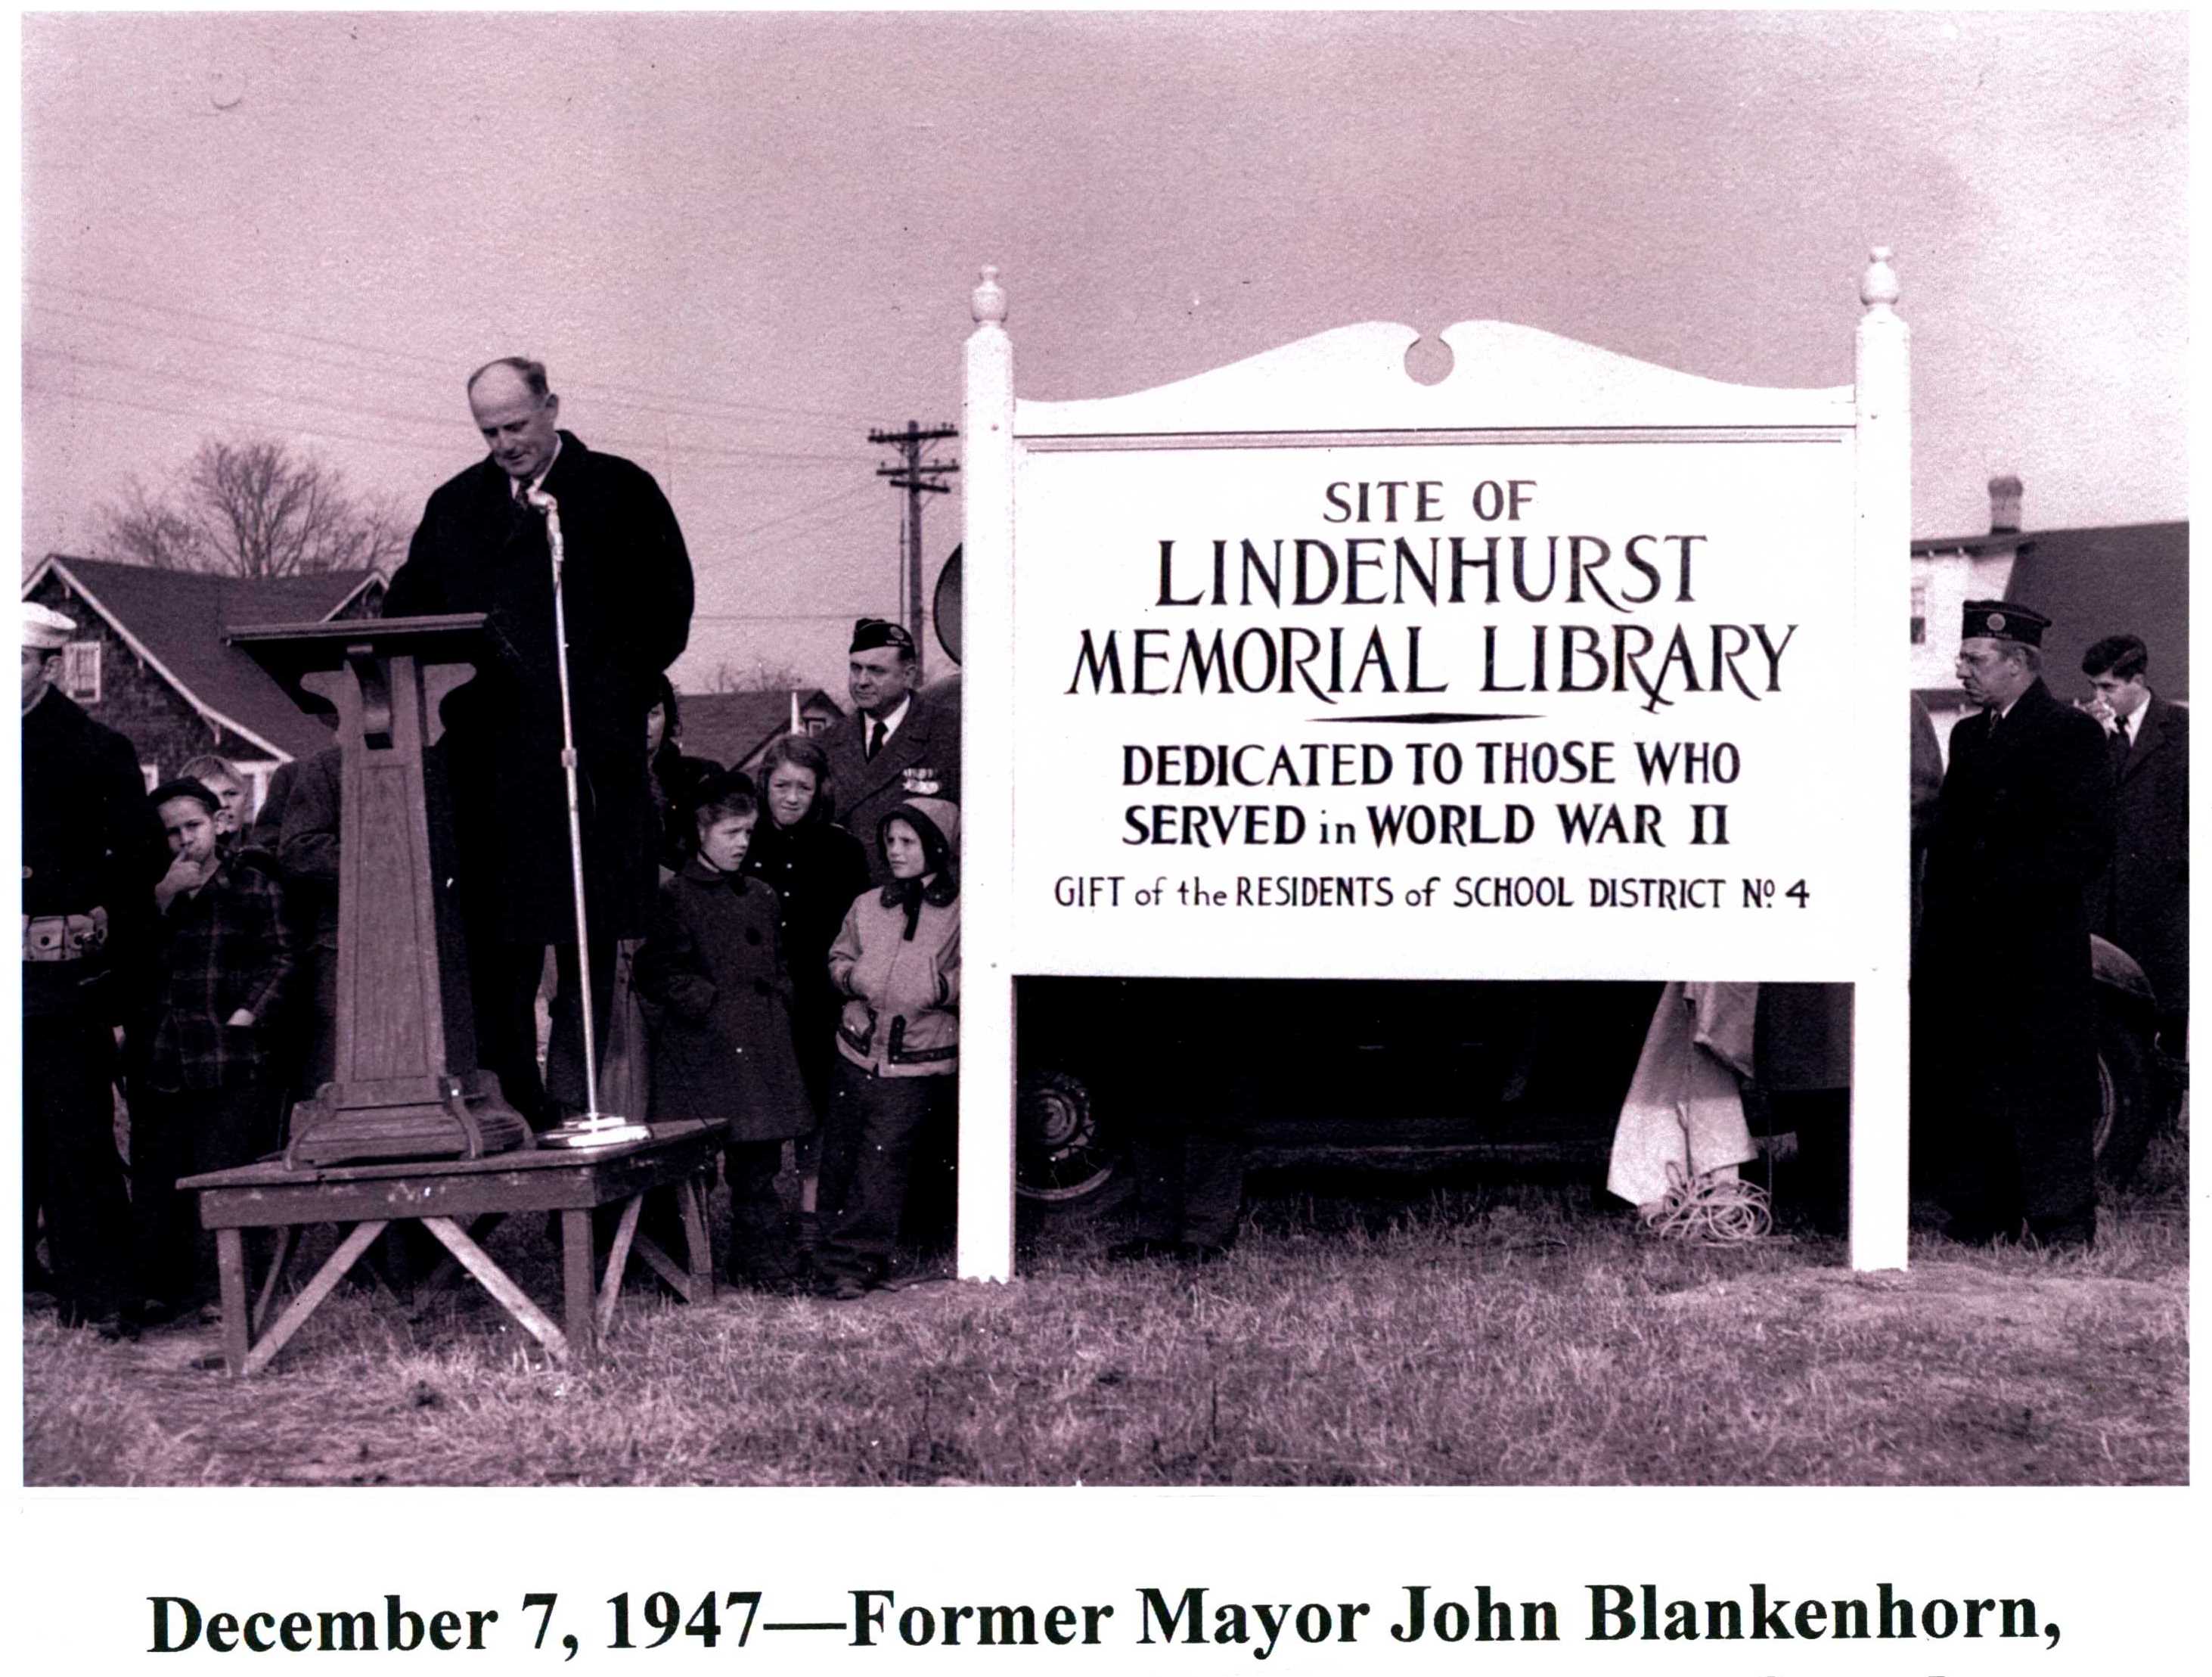 Lindenhurst Memorial Library dedication performed by Mayor John Blankenhorn.